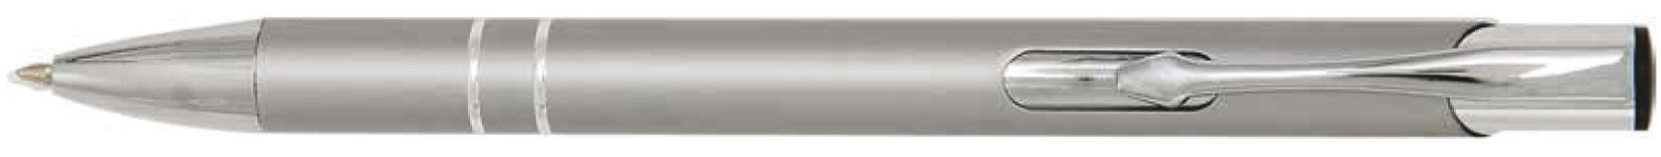 BestPen - metal promotional pen with engraving C-04